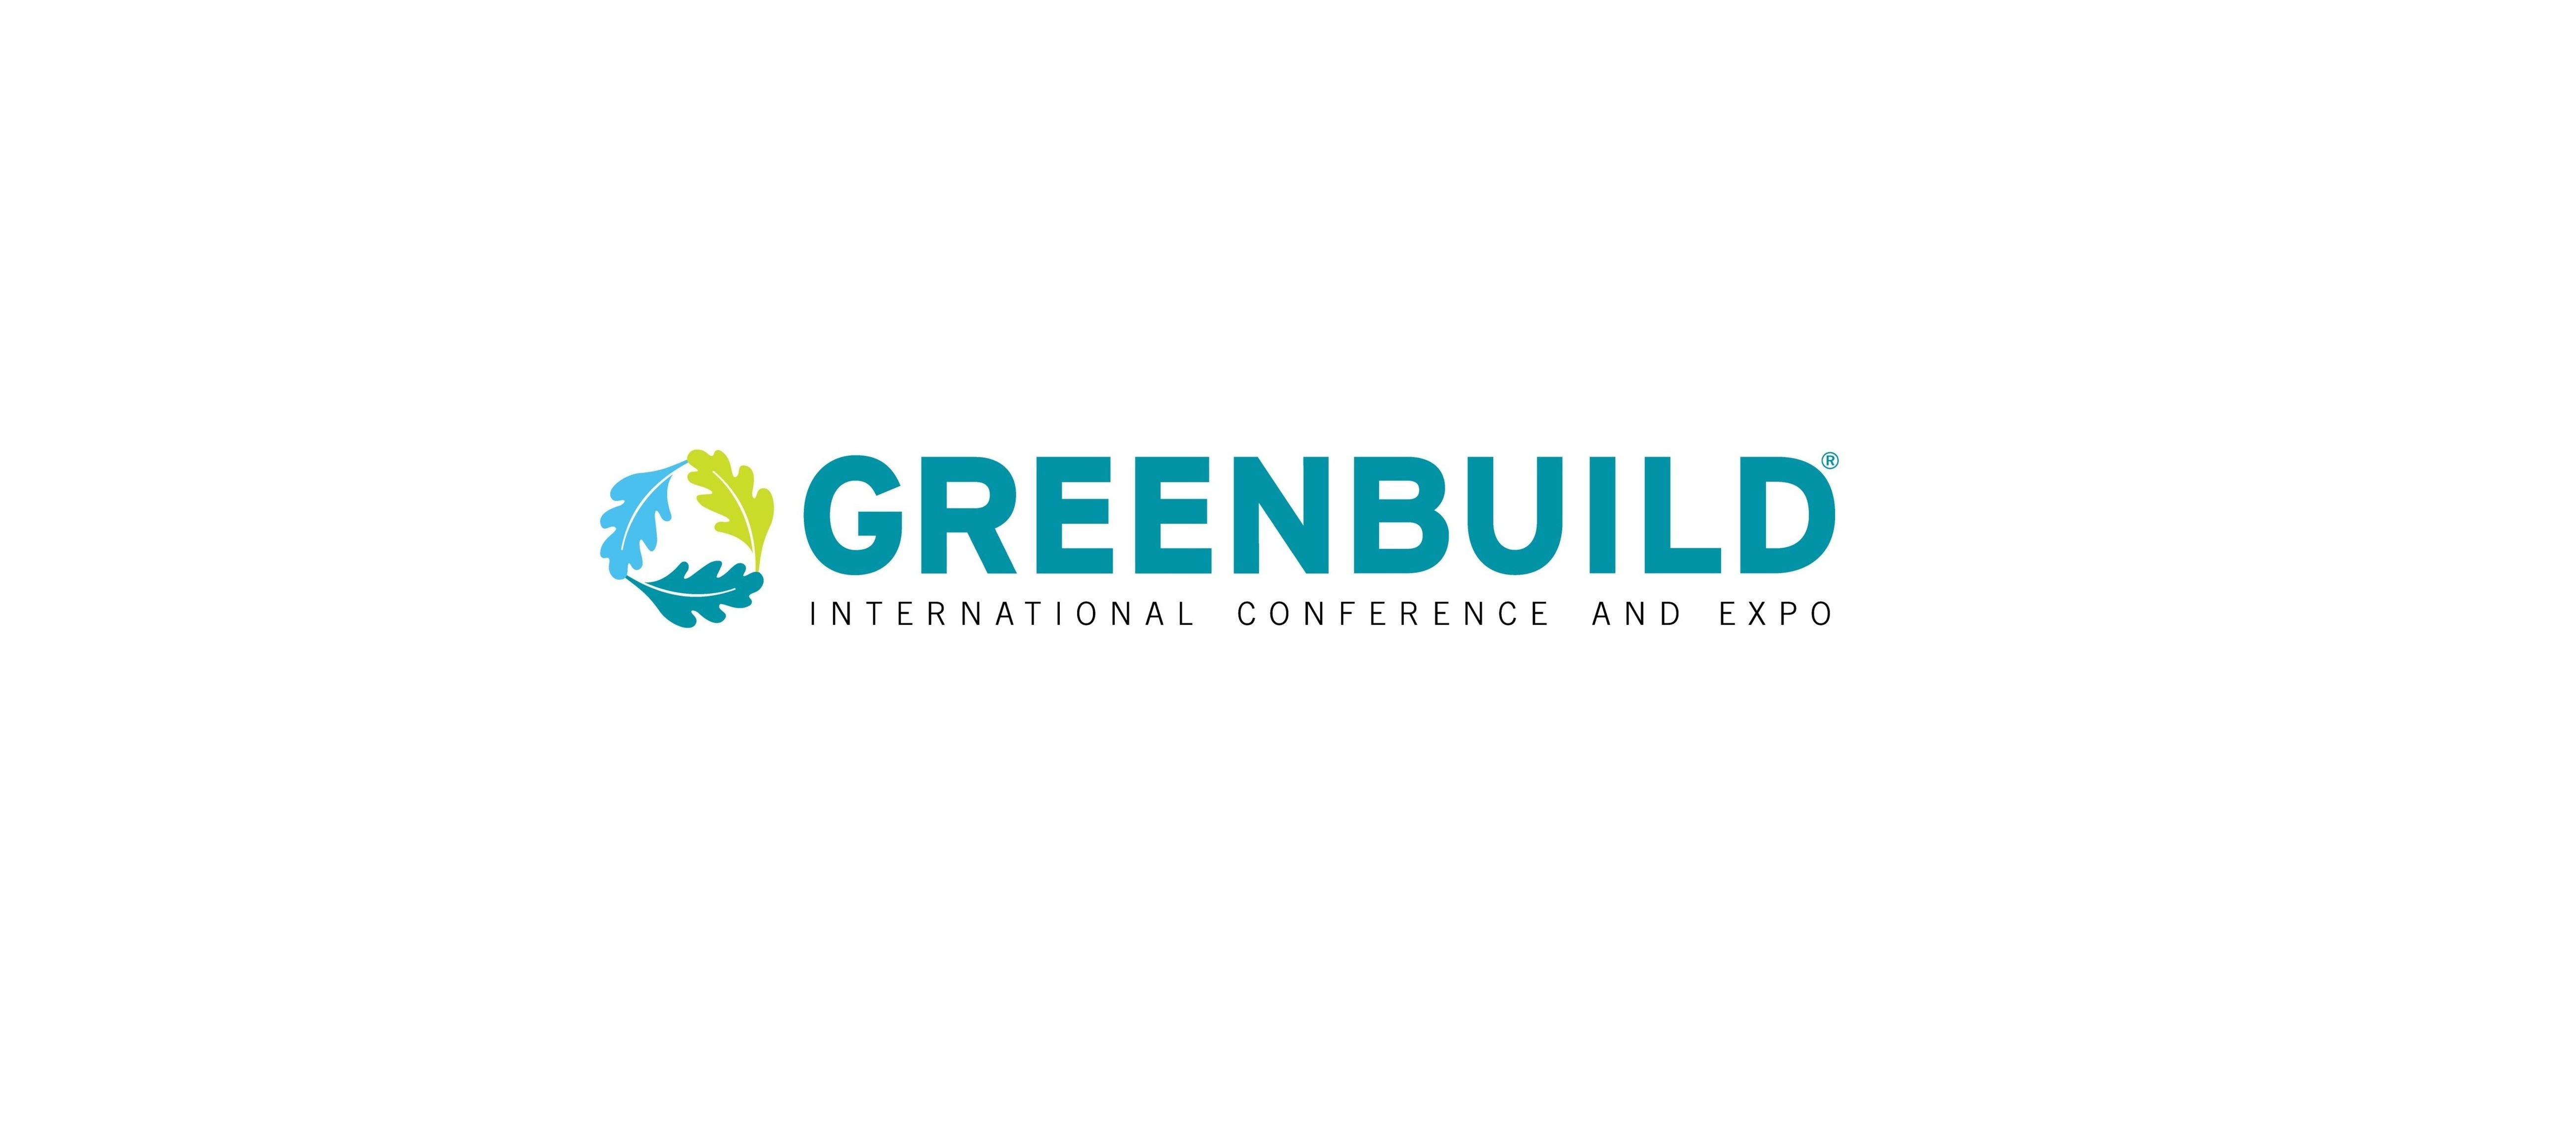 Conheça o Greenbuild International Conference and Expo